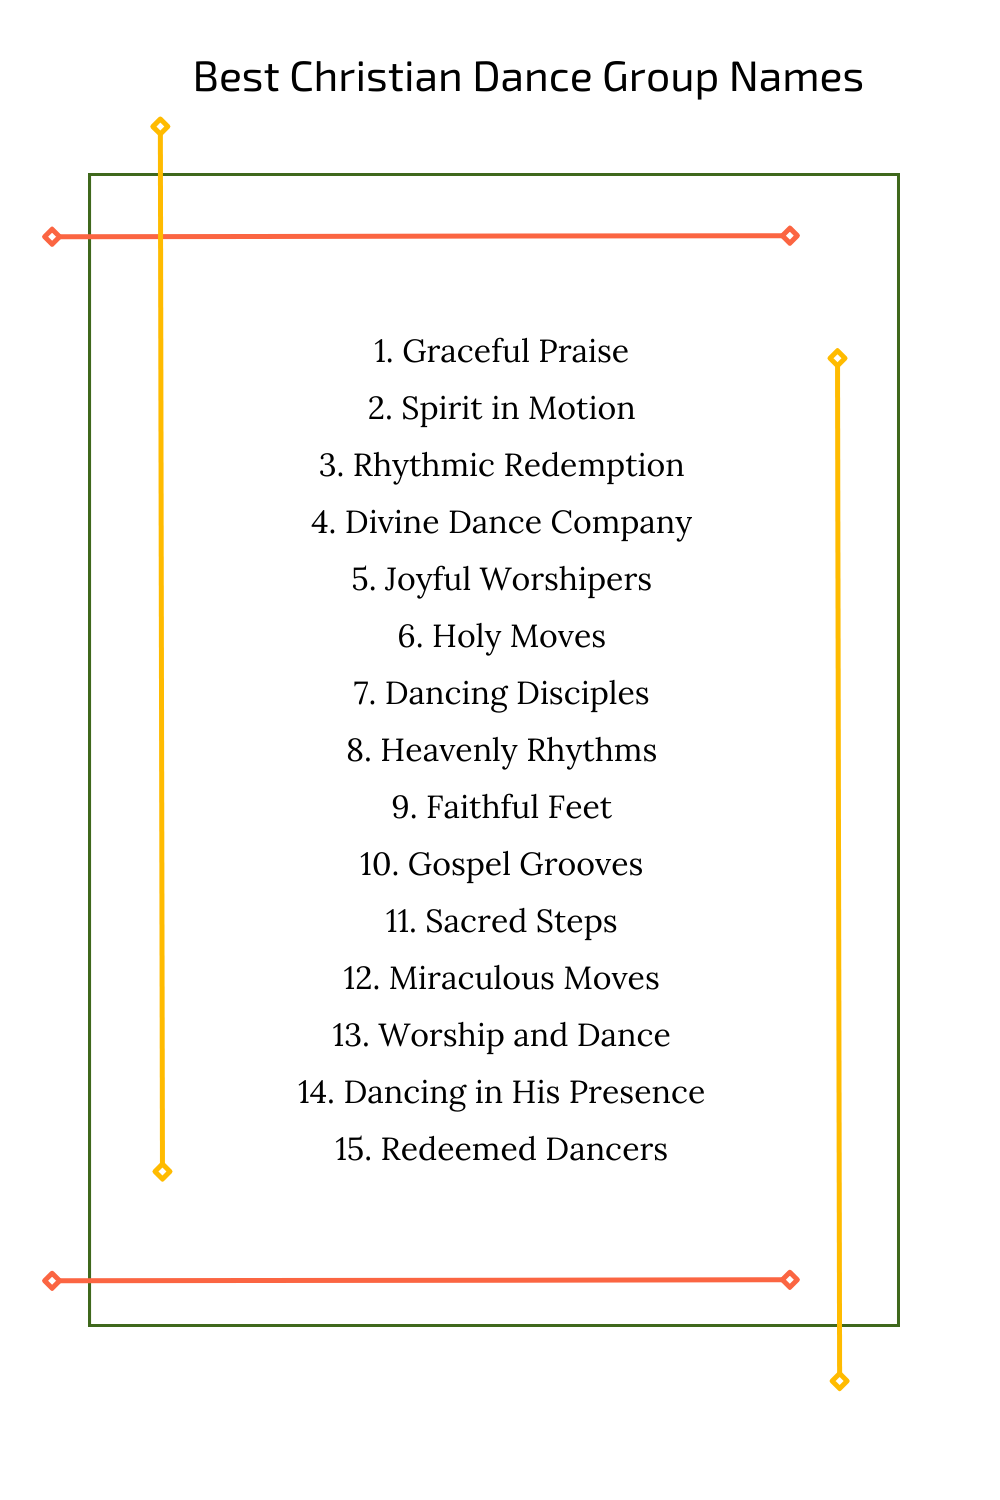 Best Christian Dance Group Names